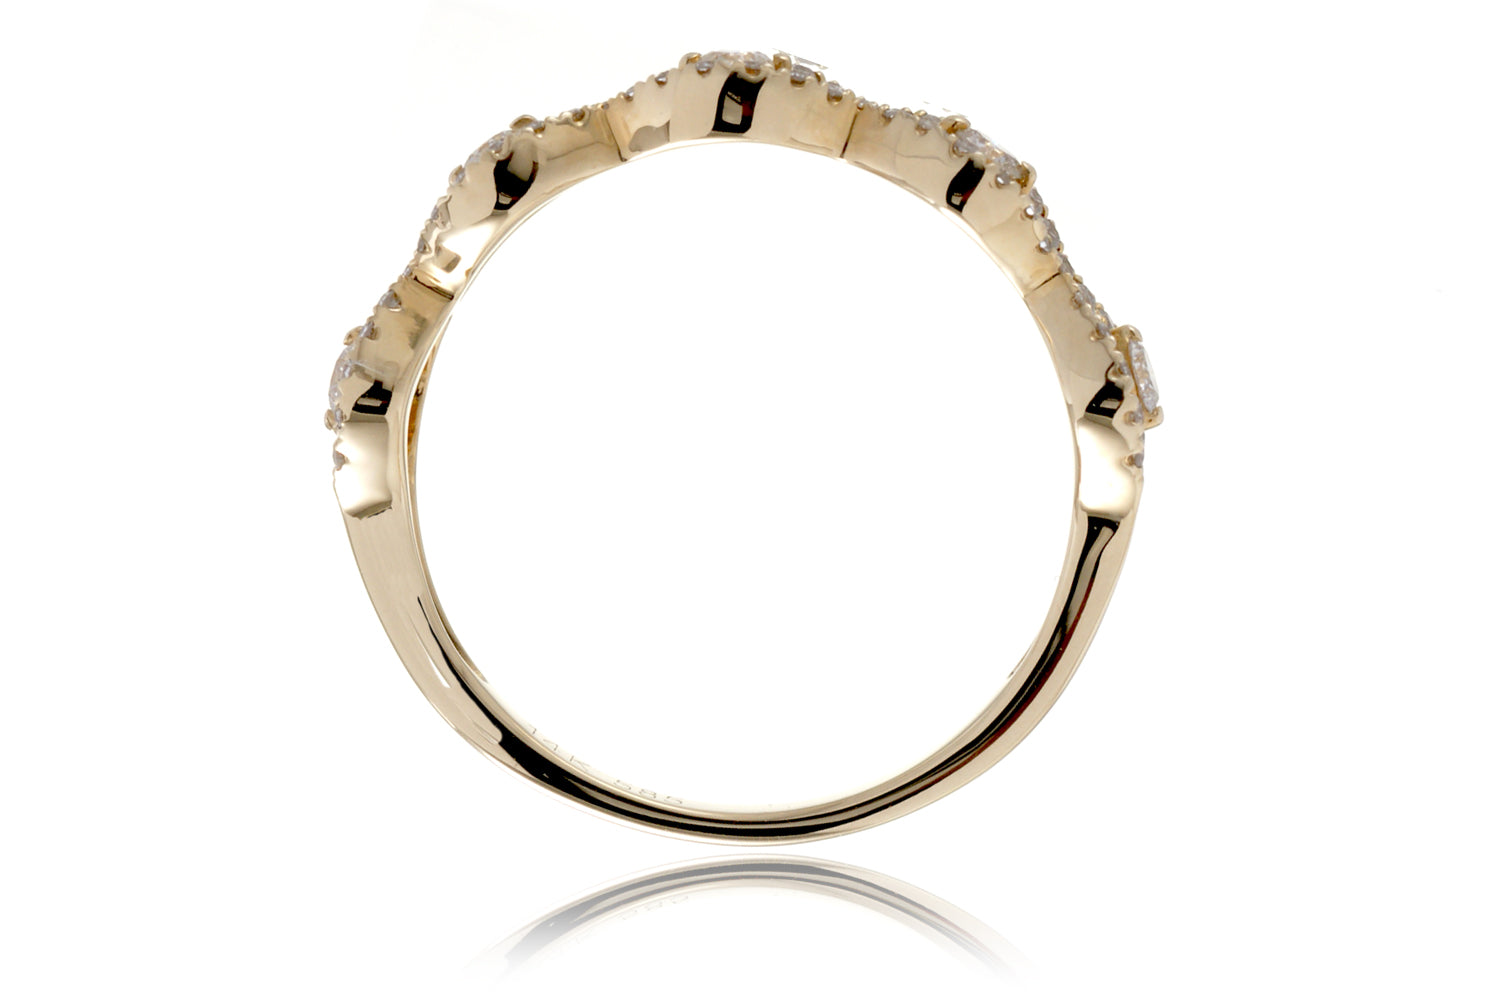 The Lorraine Diamond Ring